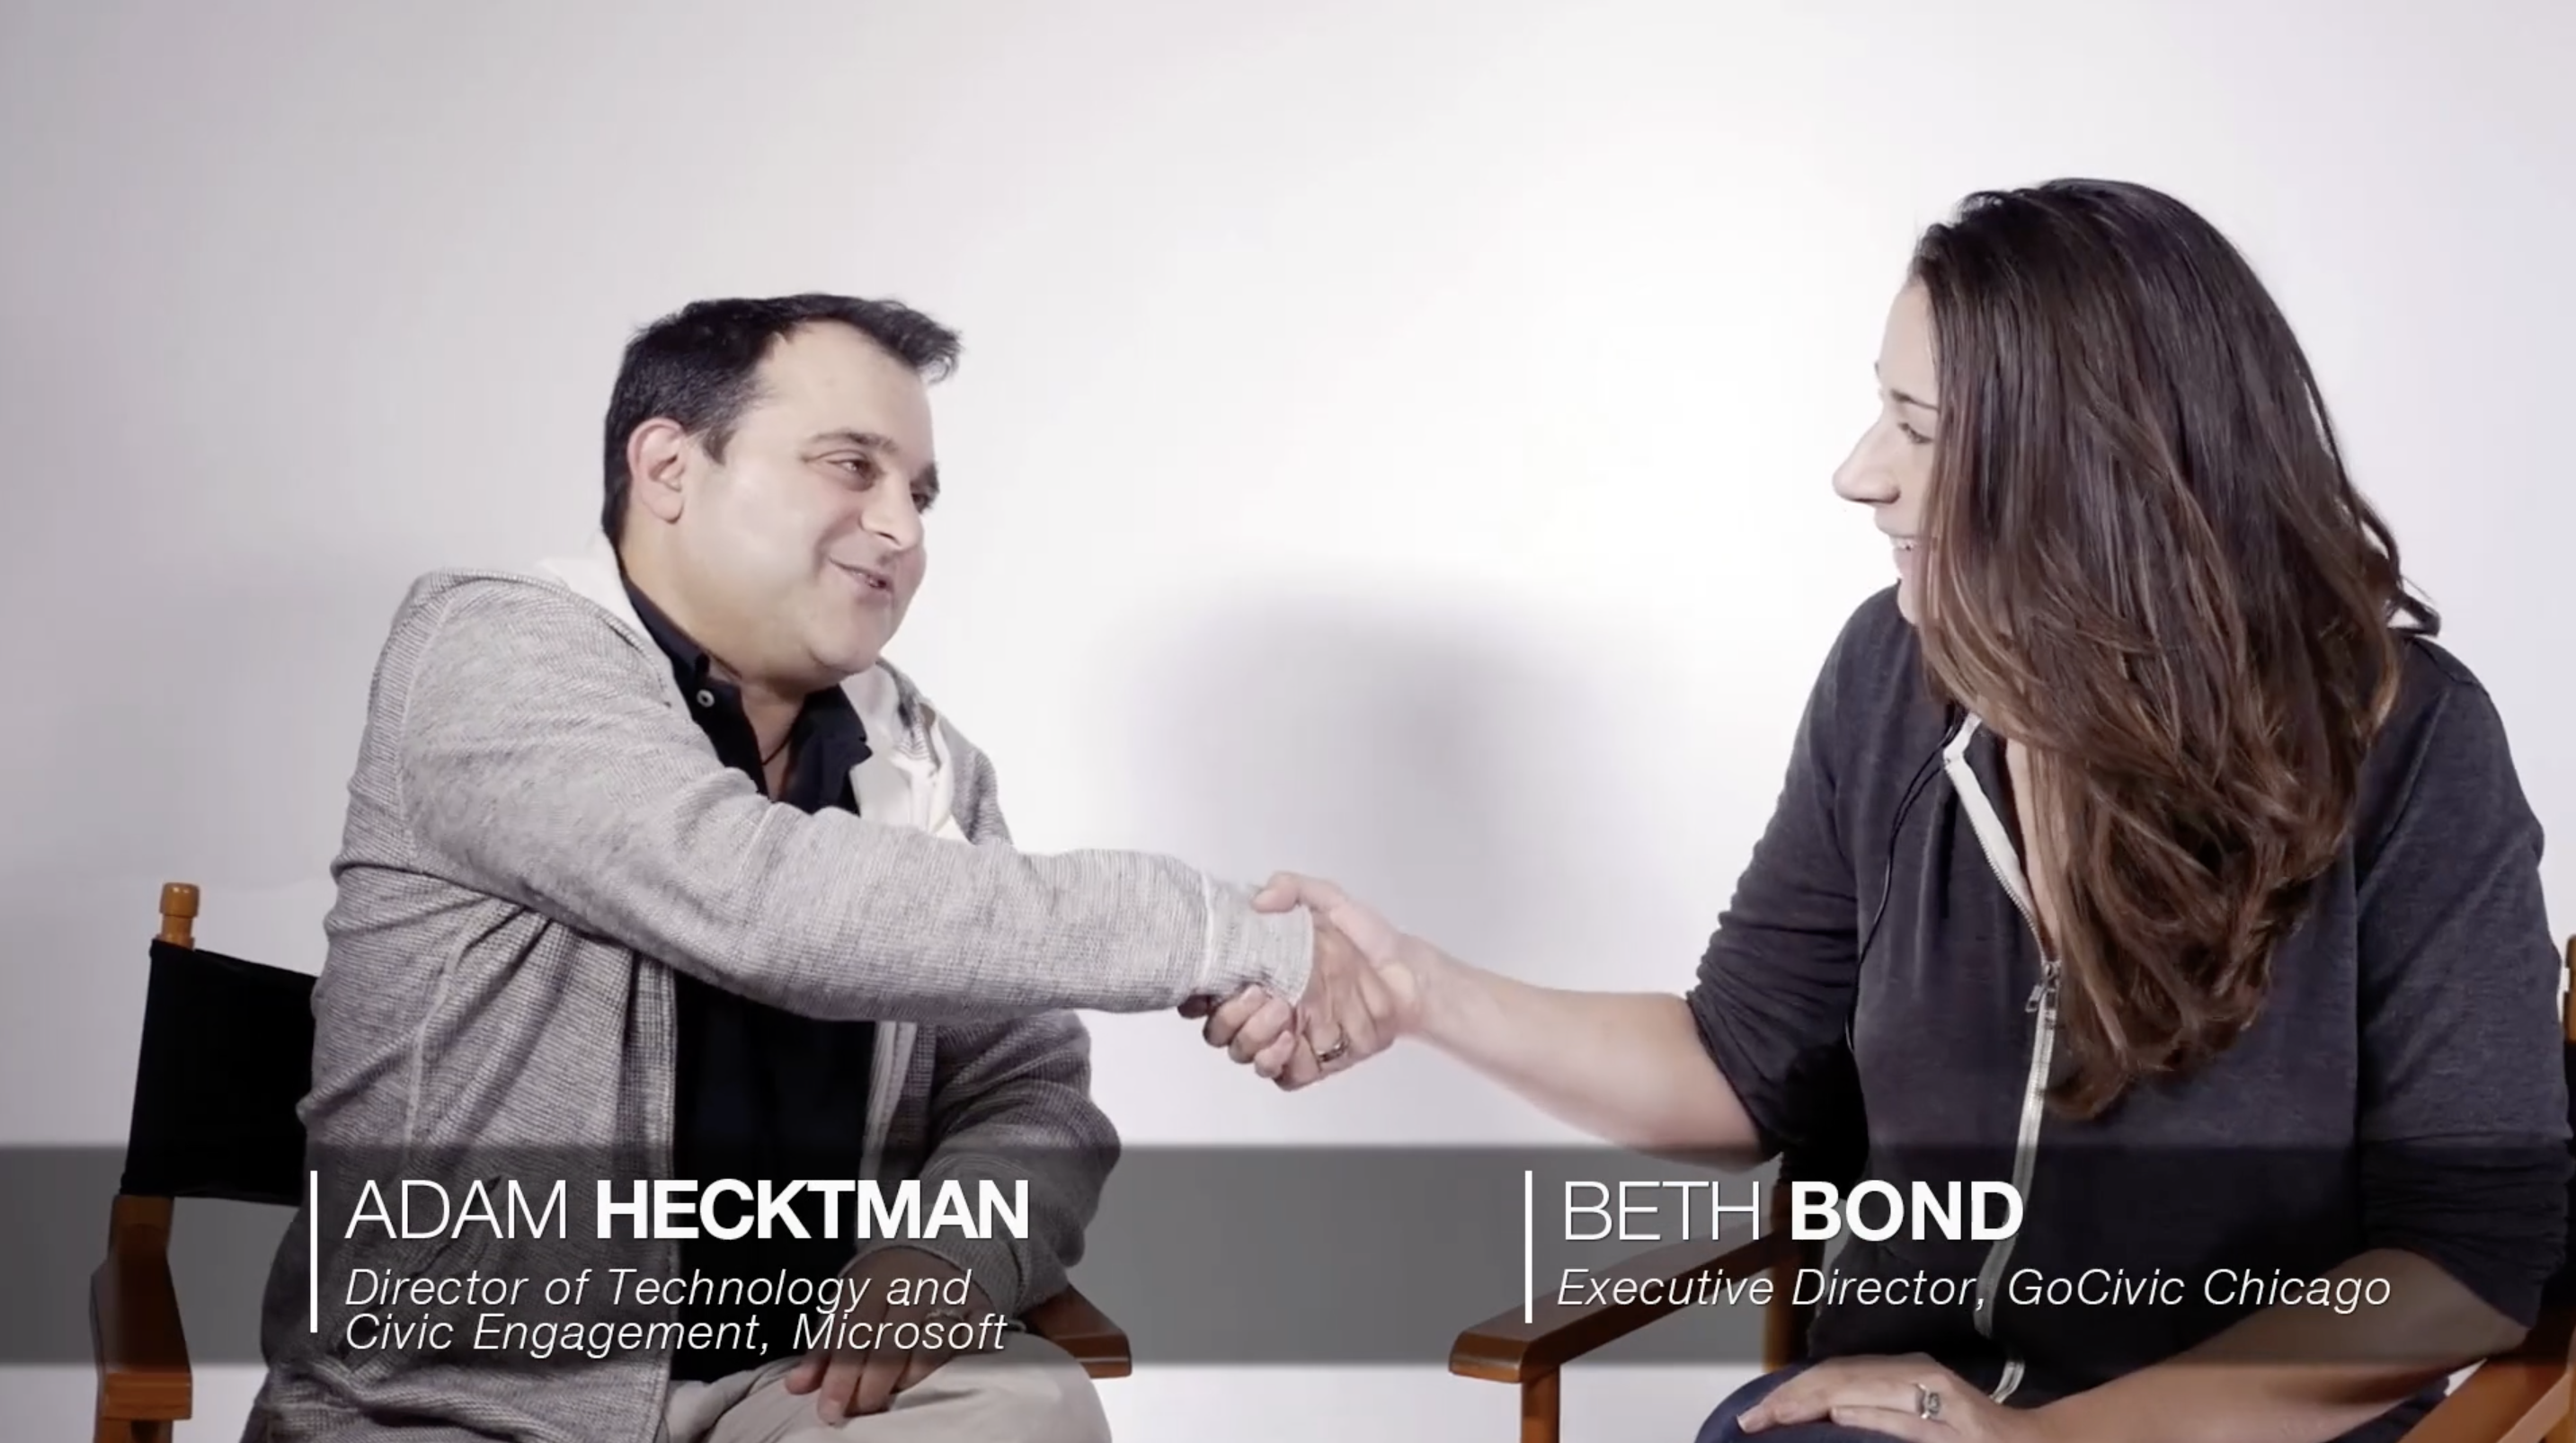 Microsoft's Adam Hecktman talks with GoCivic Chicago's Beth Bond